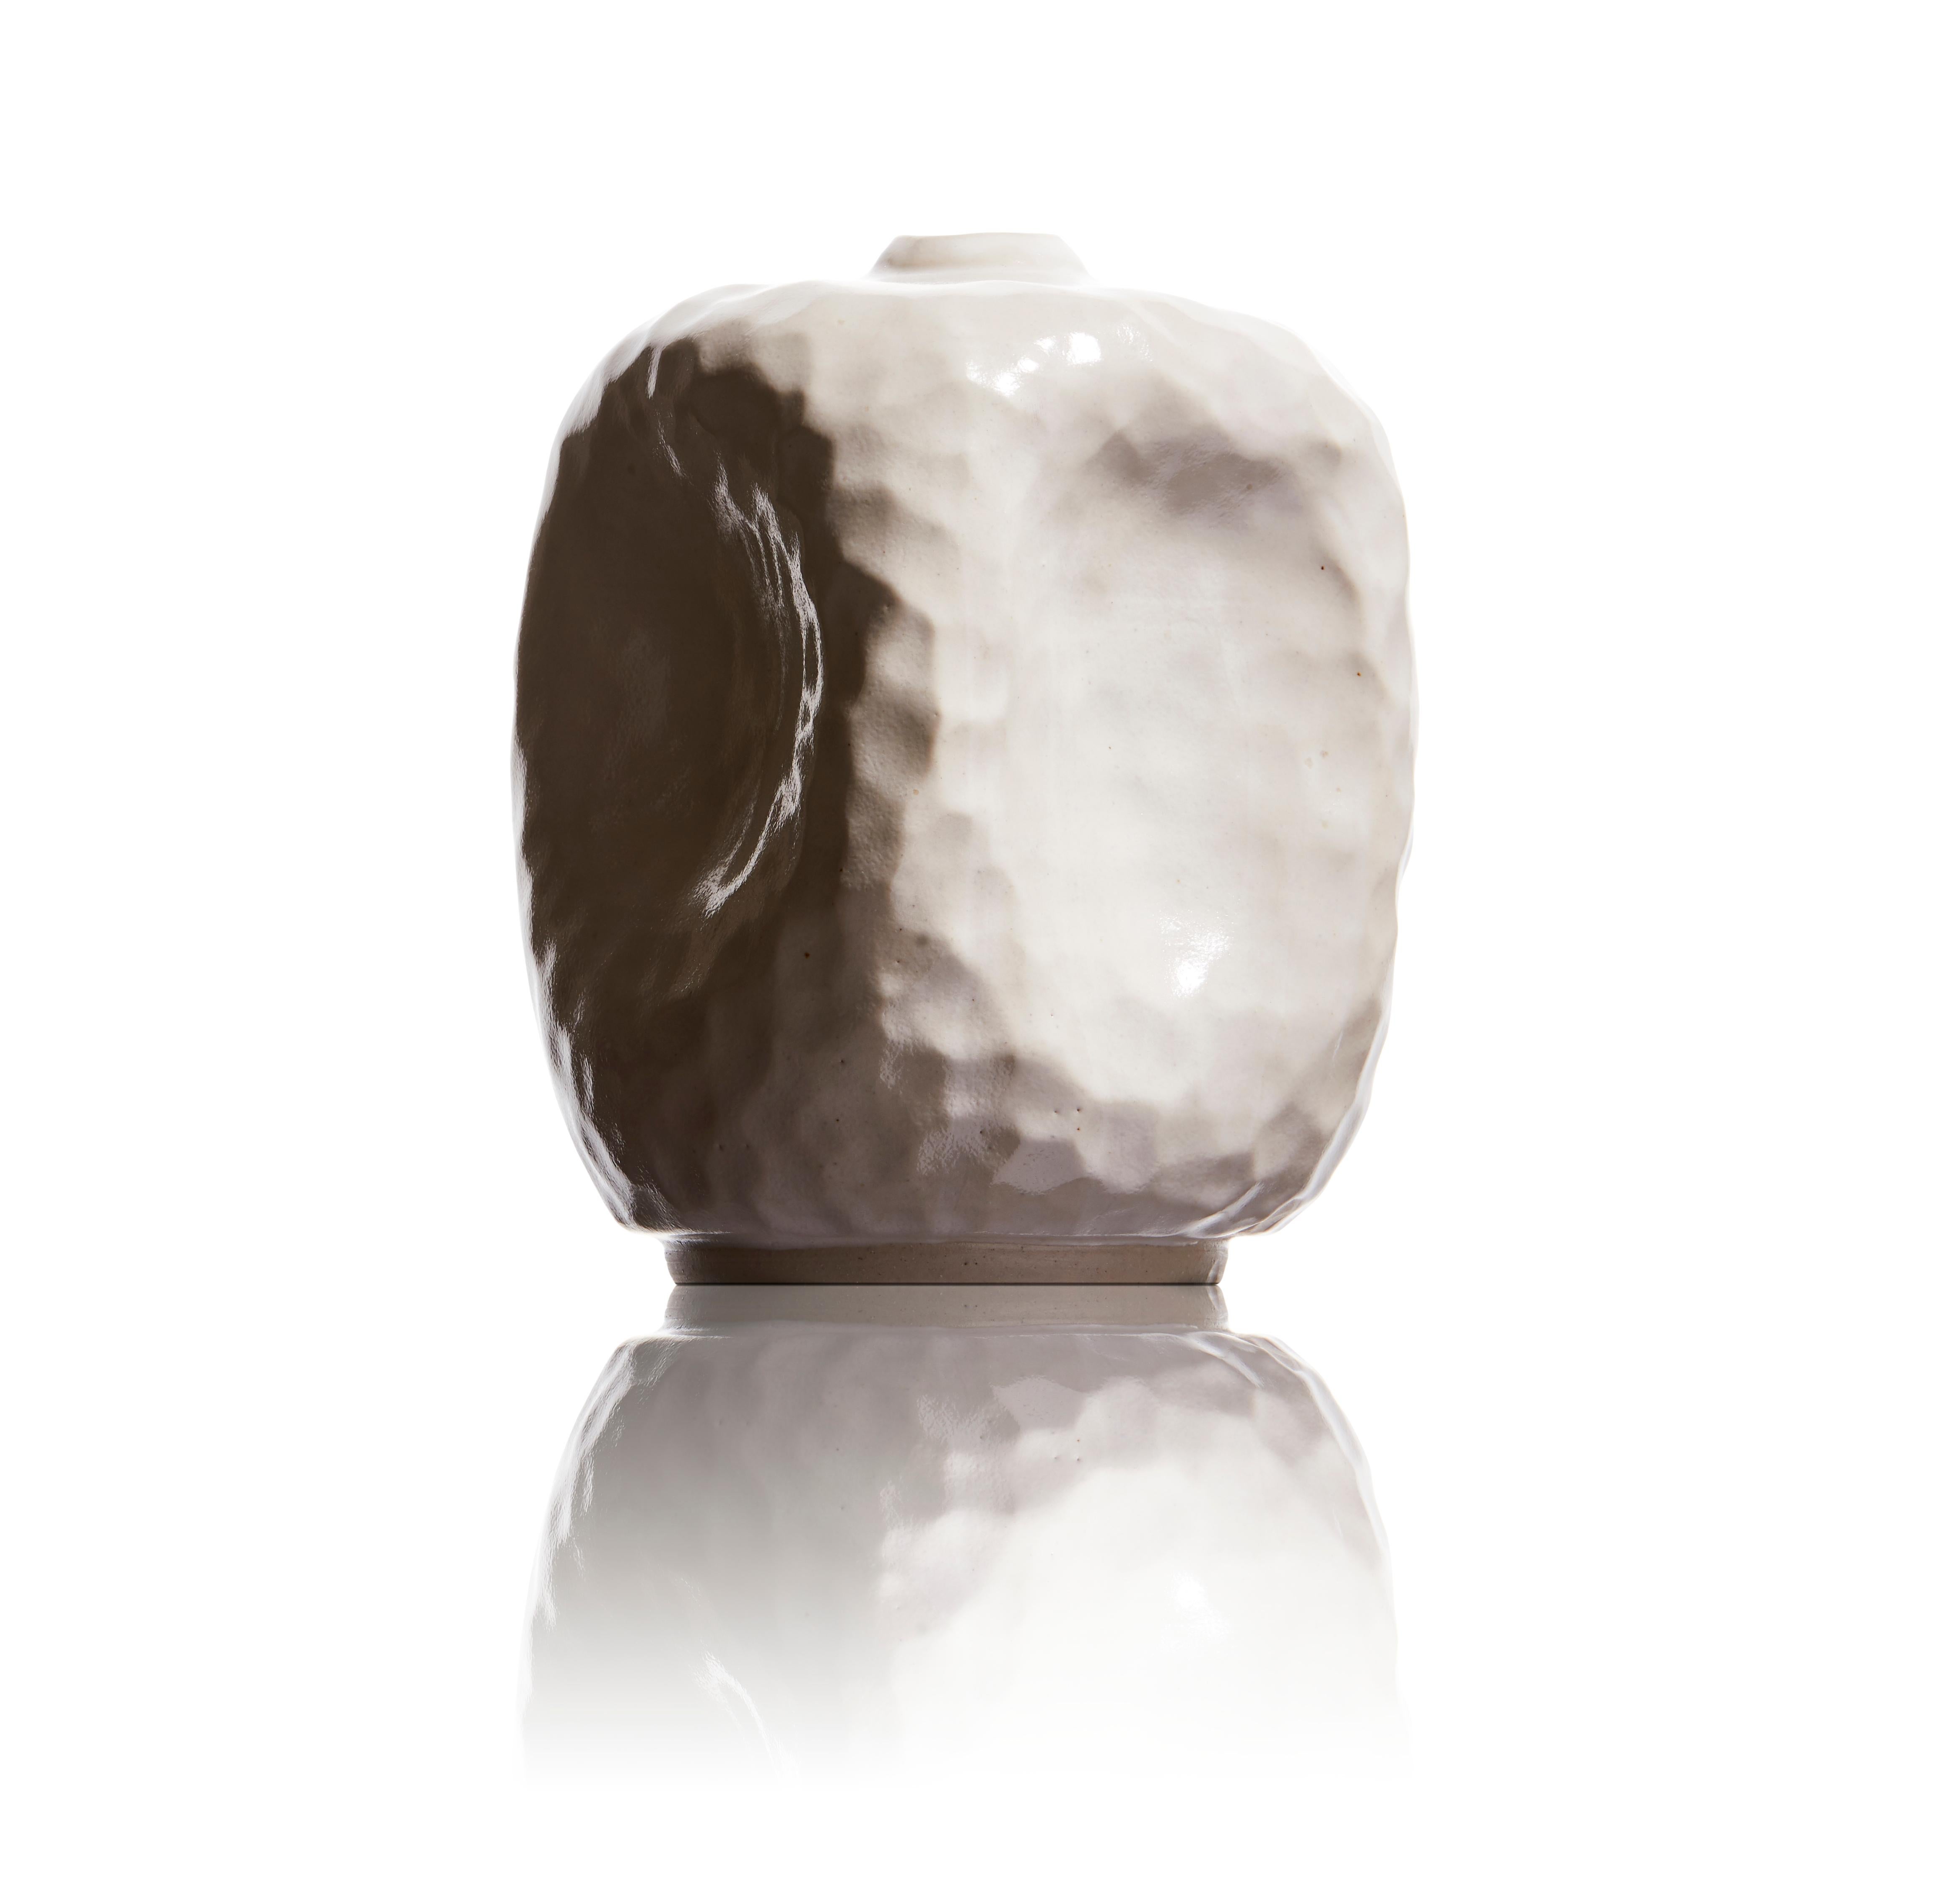 Modern White Contemporary Ceramic Vase, Hand Carved, Smooth - Textured Vessel Sculpture